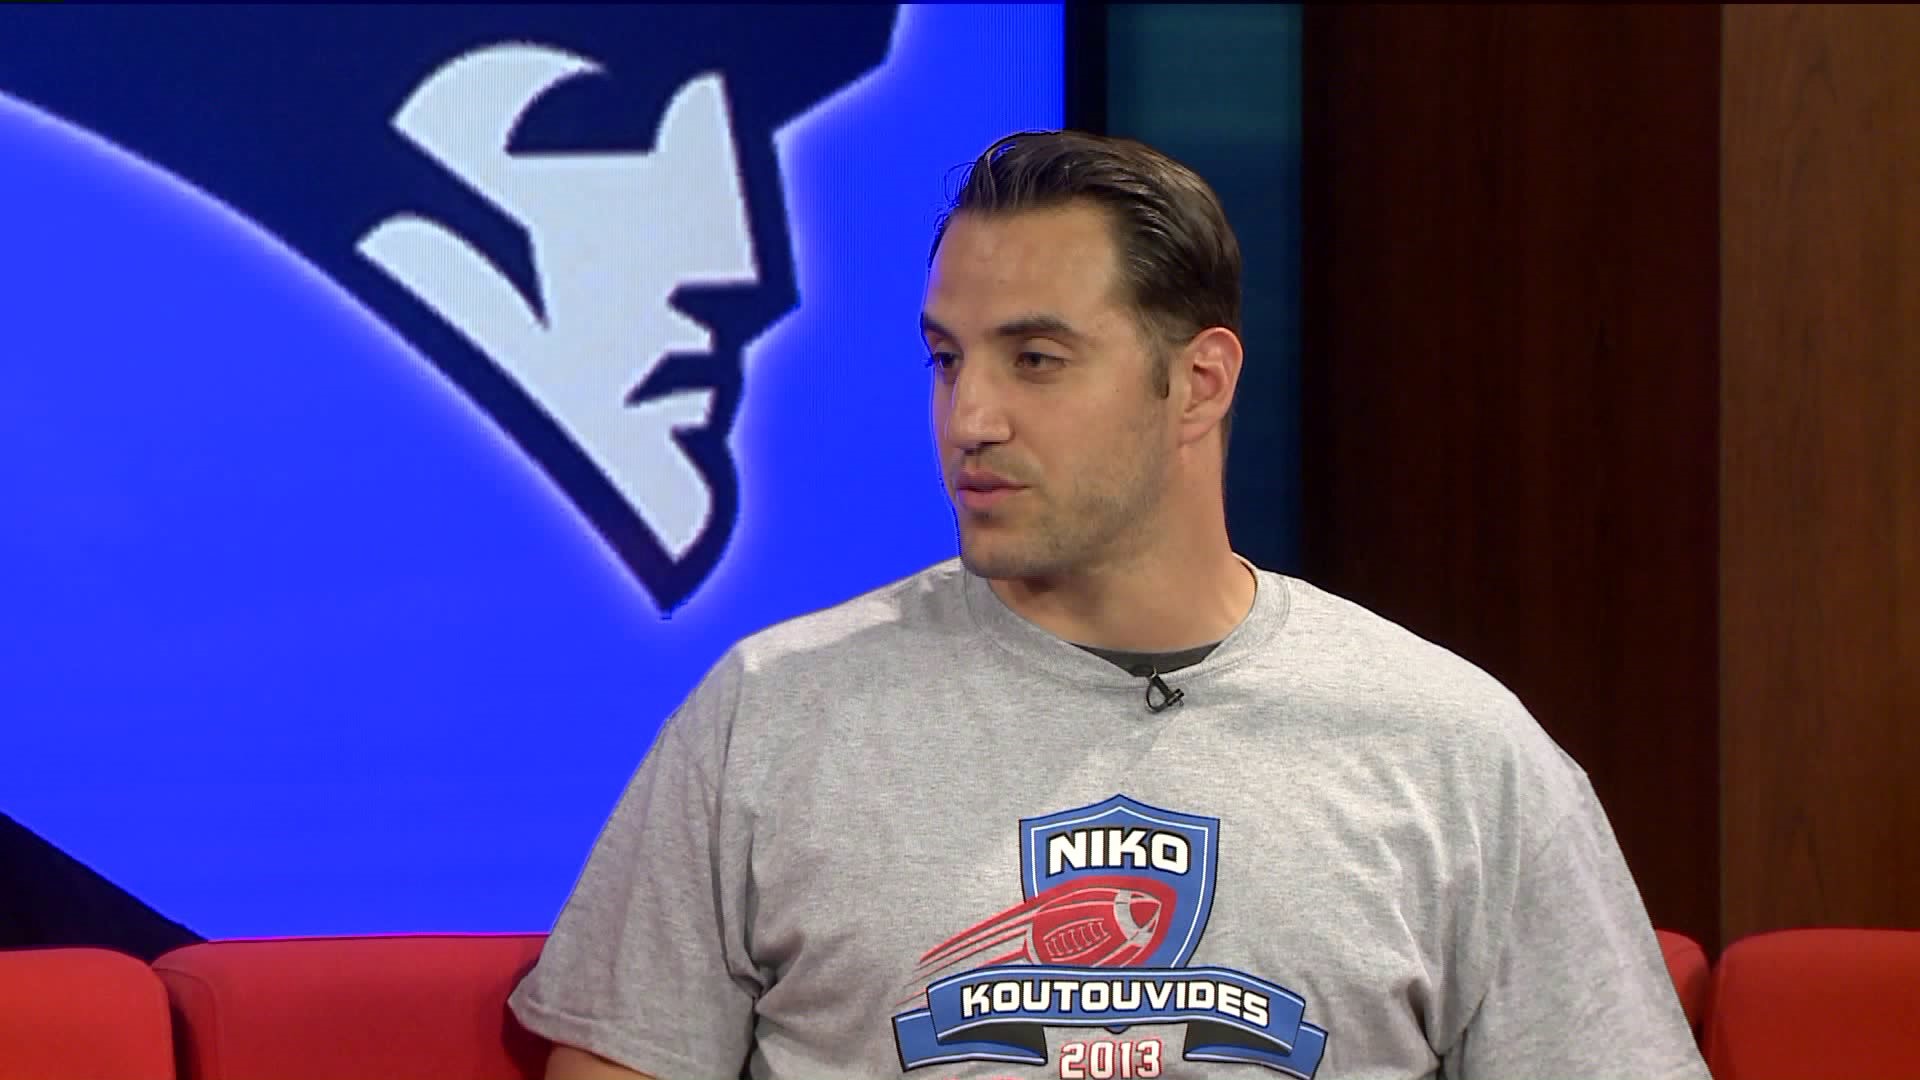 Former Patriots player Niko Koutouvides talks about his former teammate Aaron Hernandez